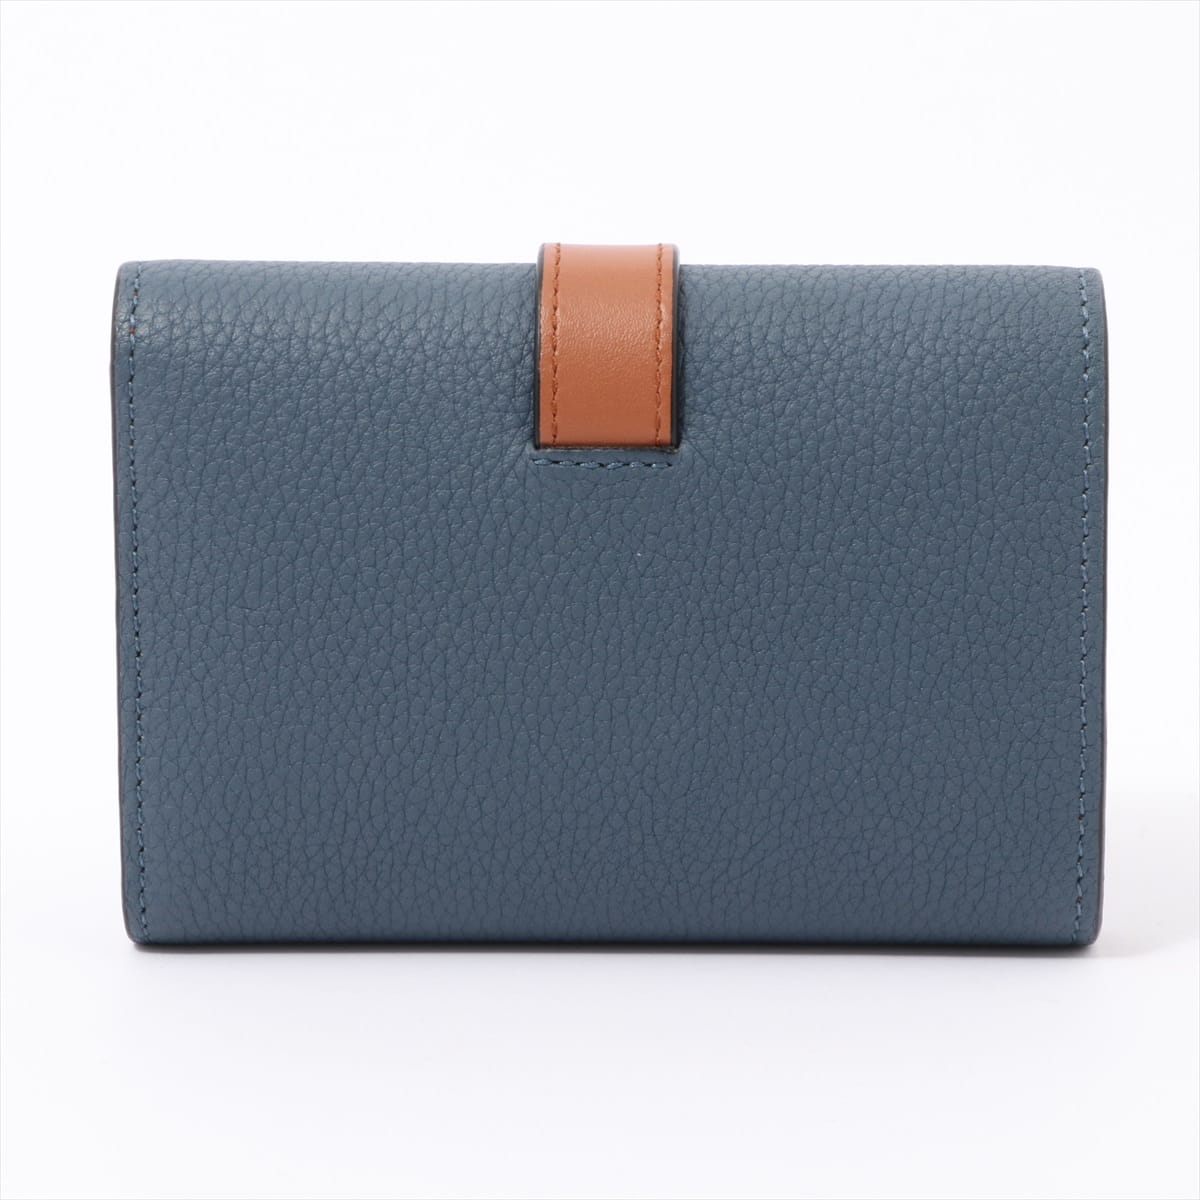 Loewe Small Vertical Wallet Leather Wallet Navy blue